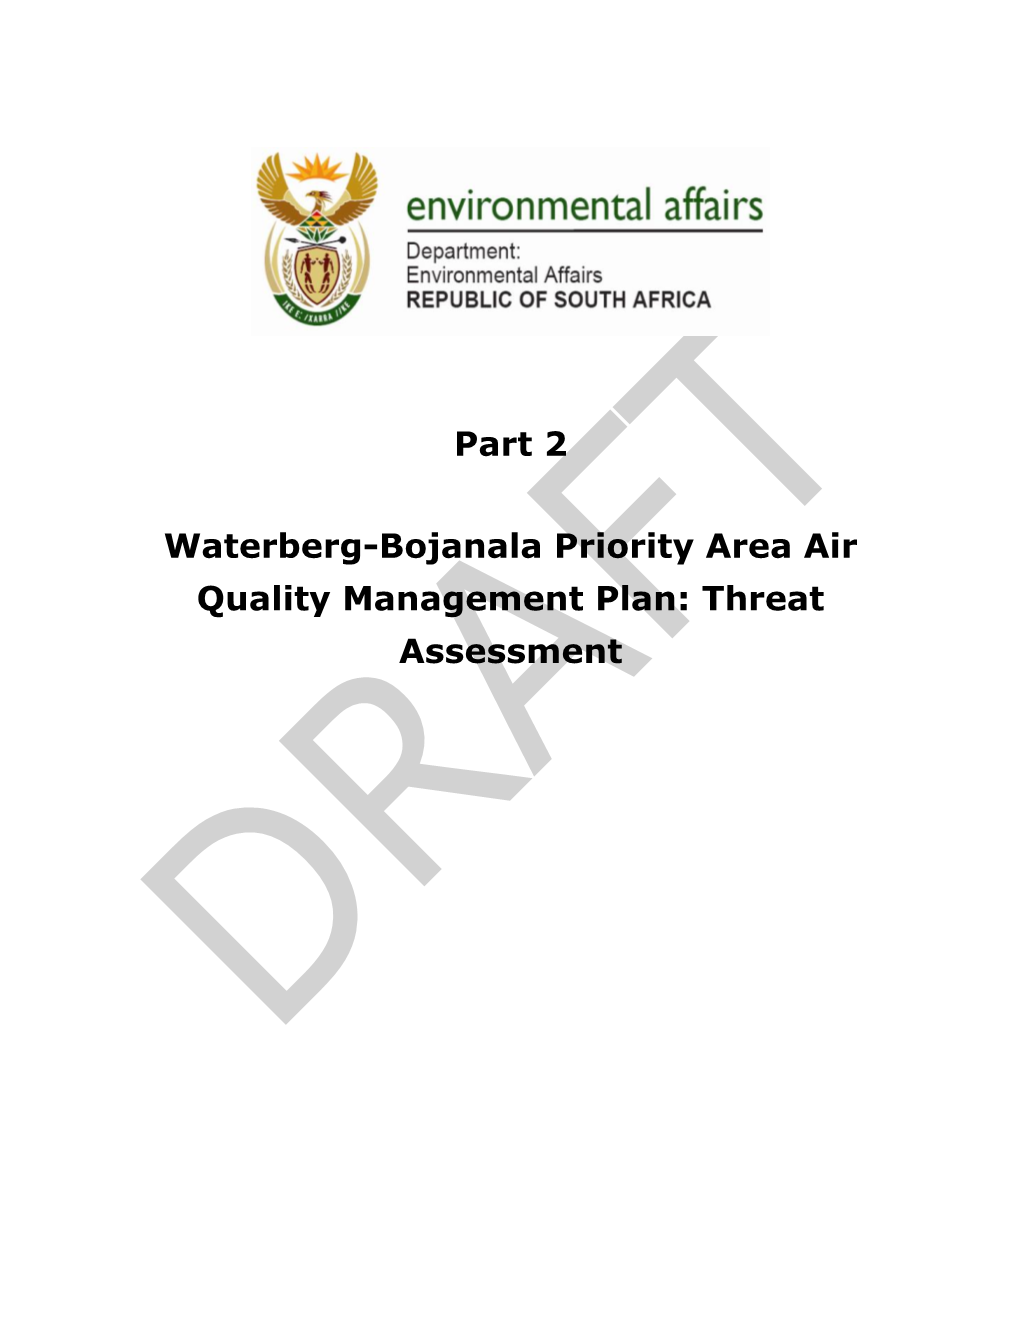 Waterberg-Bojanala Priority Area Air Quality Management Plan: Threat Assessment